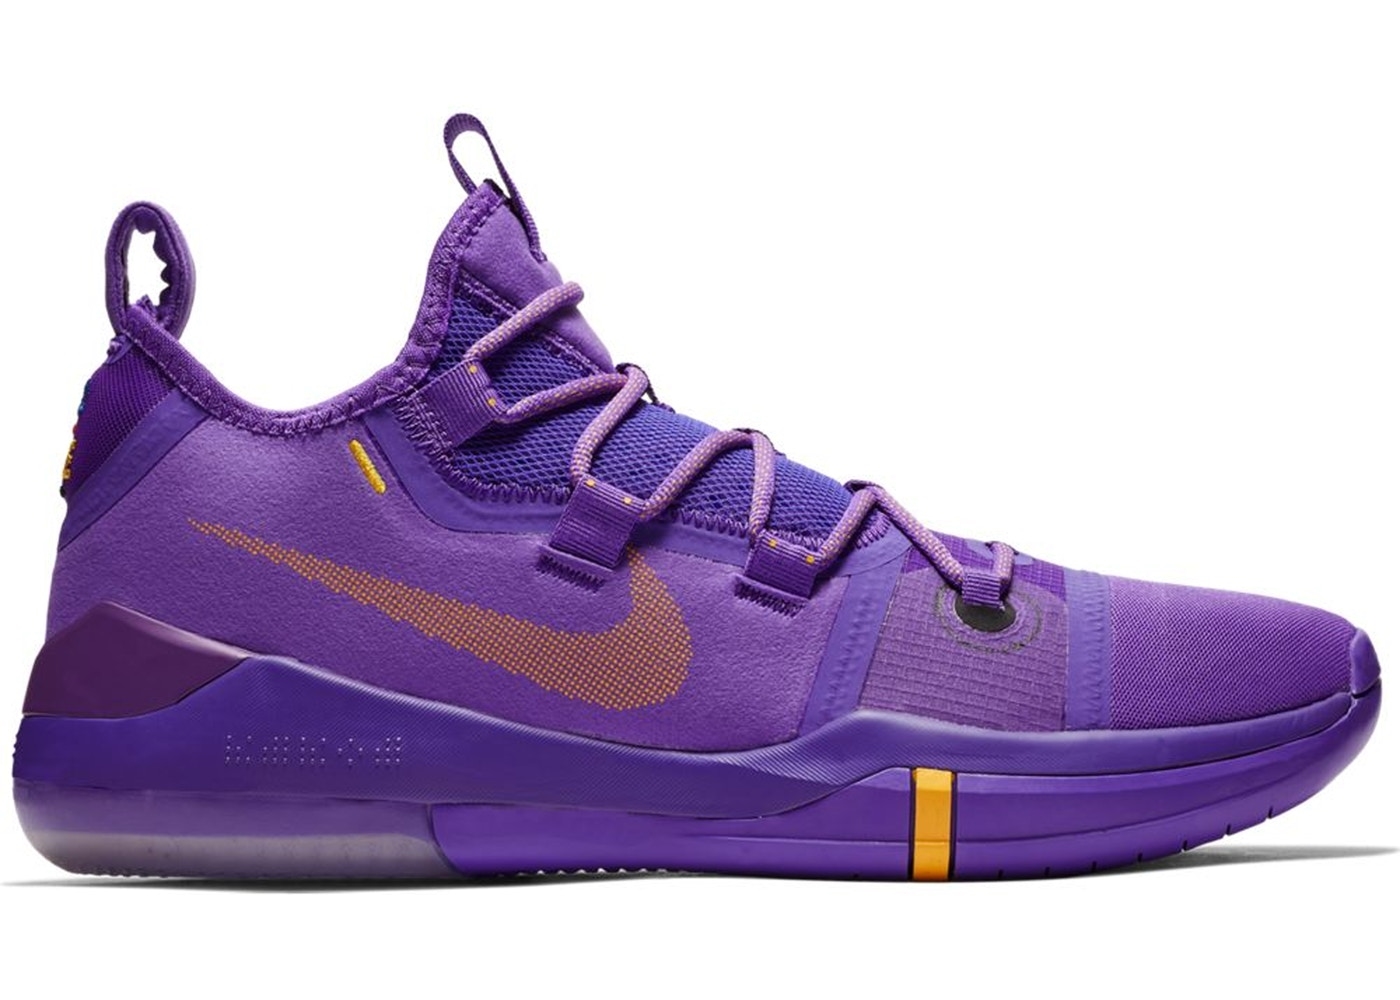 Achat / Vente Nike Kobe A.D. Lakers Pourpre (ar5515-500) Chaussure de ...